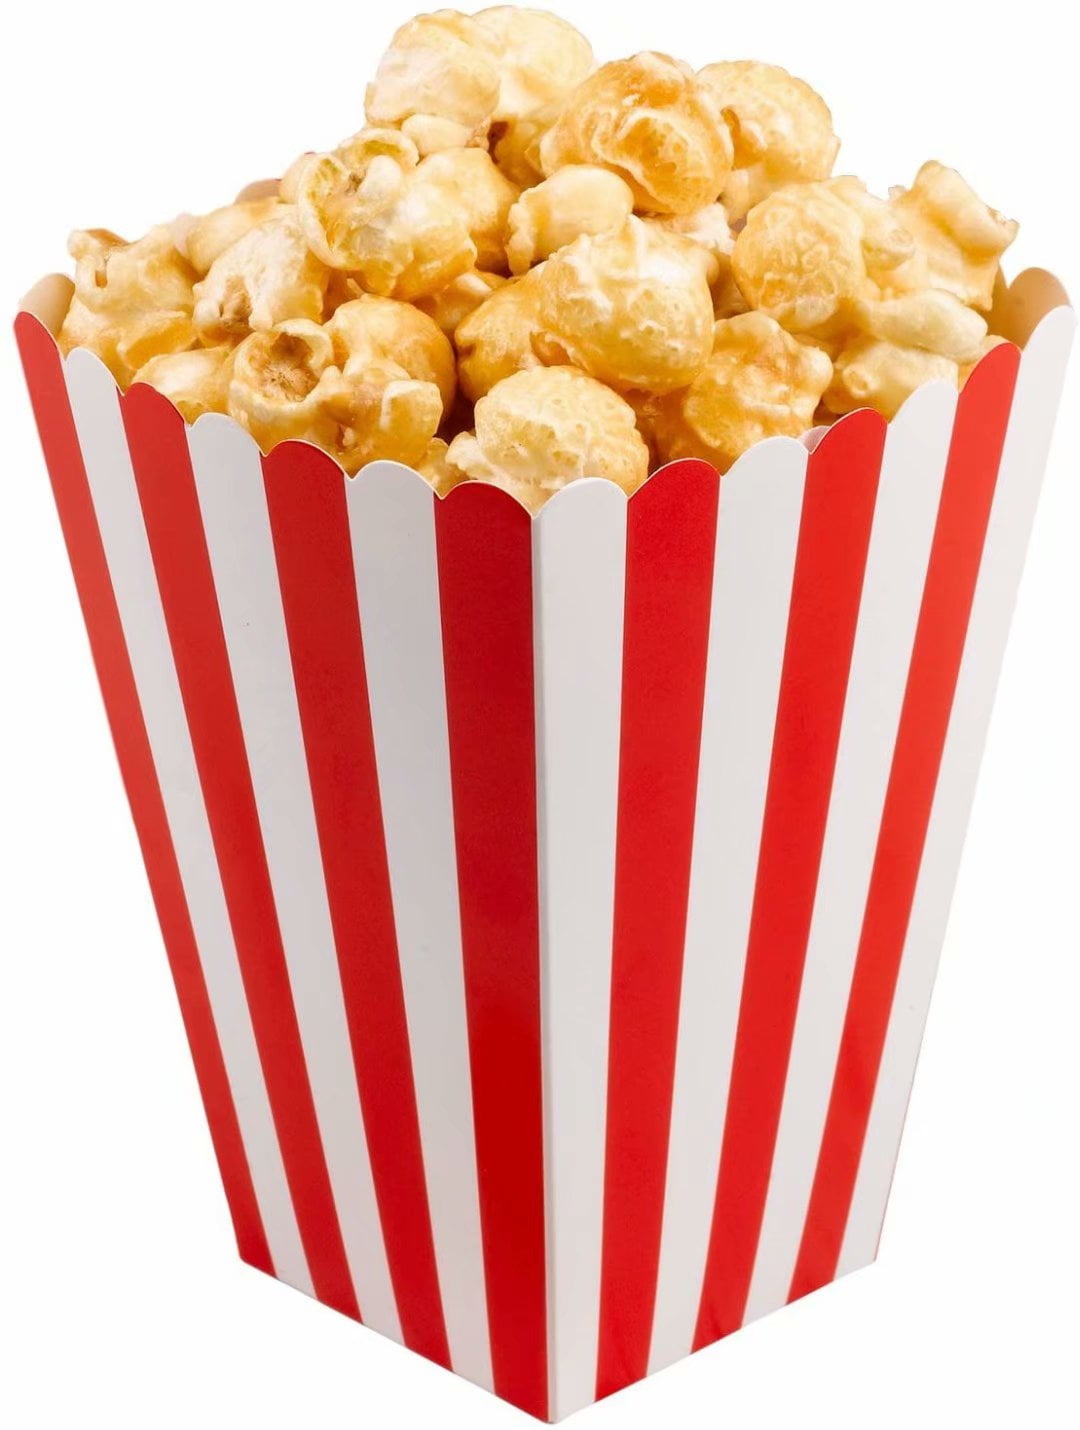 Emoji Theme Paper Popcorn Box Food Container Decor Wedding Movie Party Supplies 